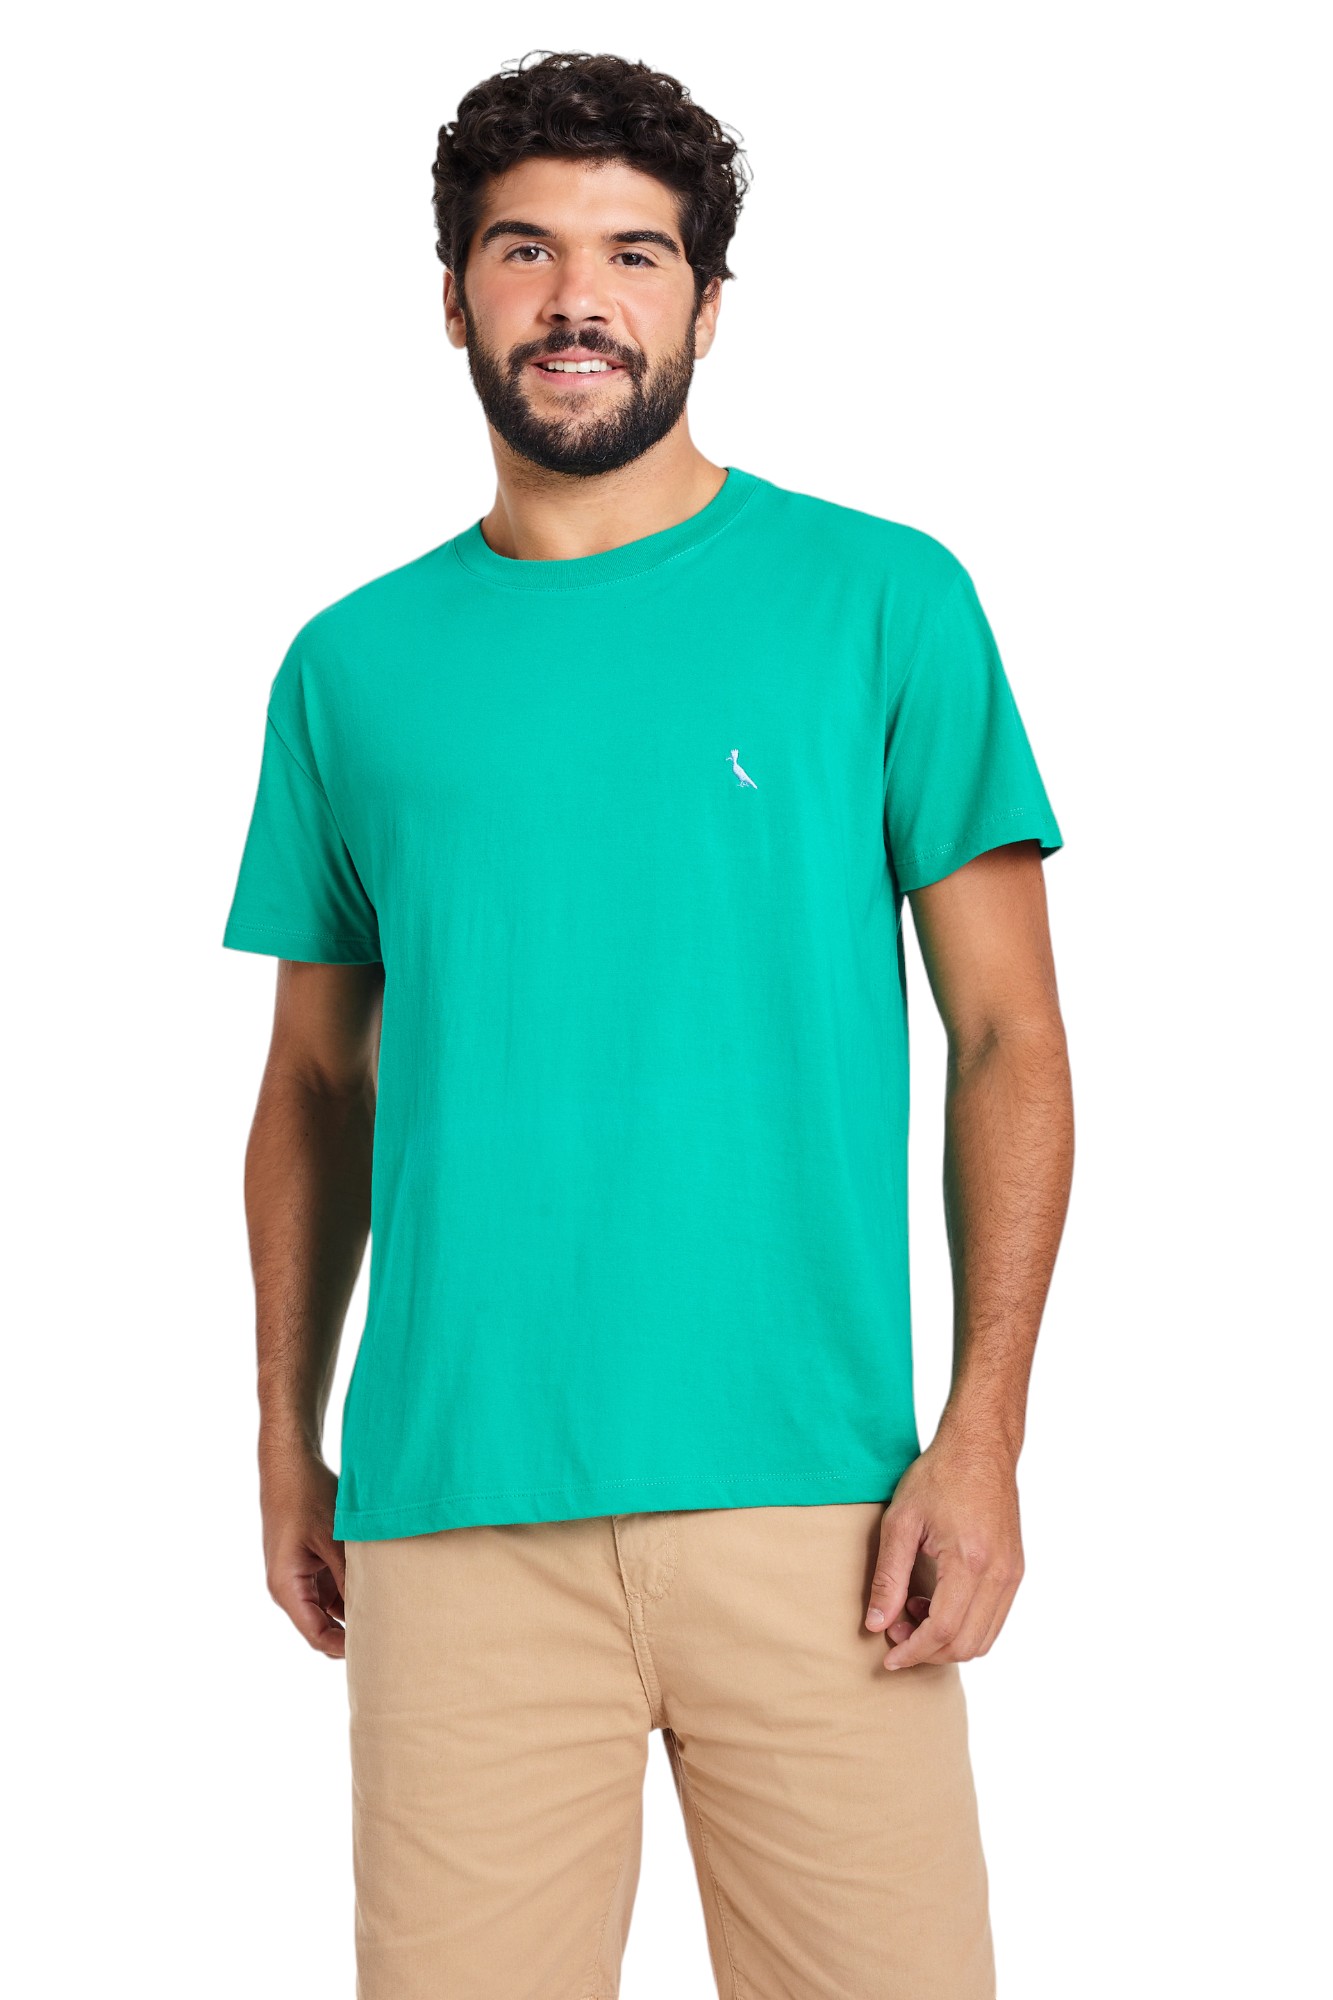 Camiseta Everlast 09f Verde - Masculina